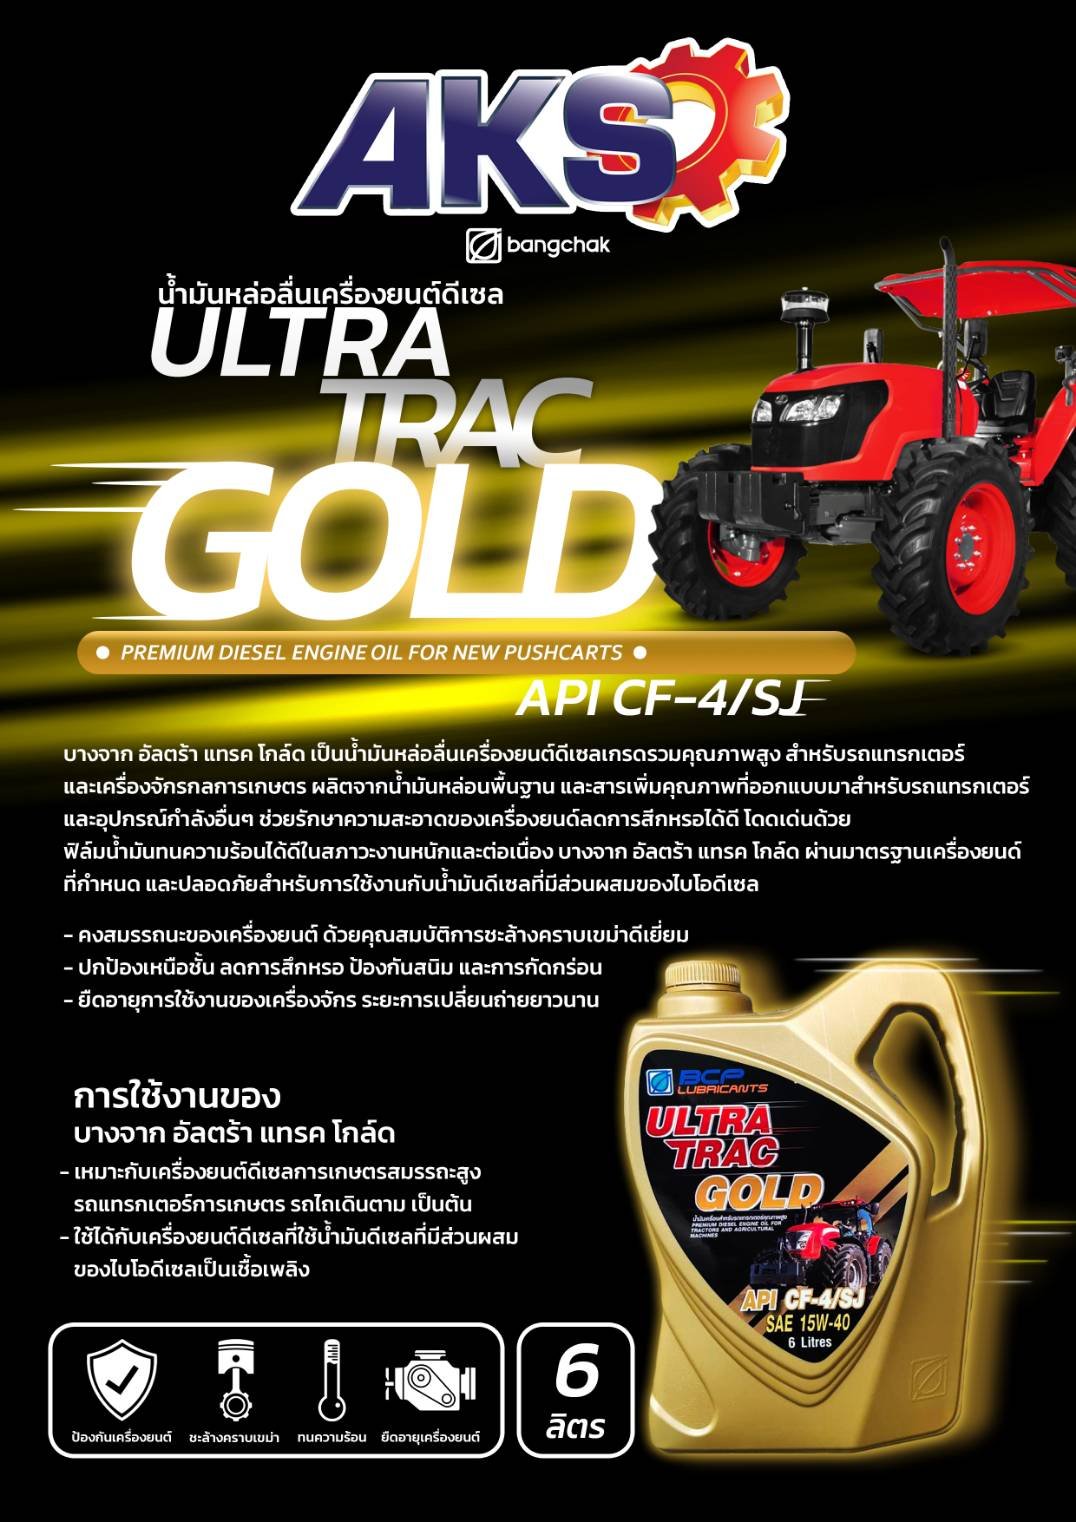 Ultratrac gold